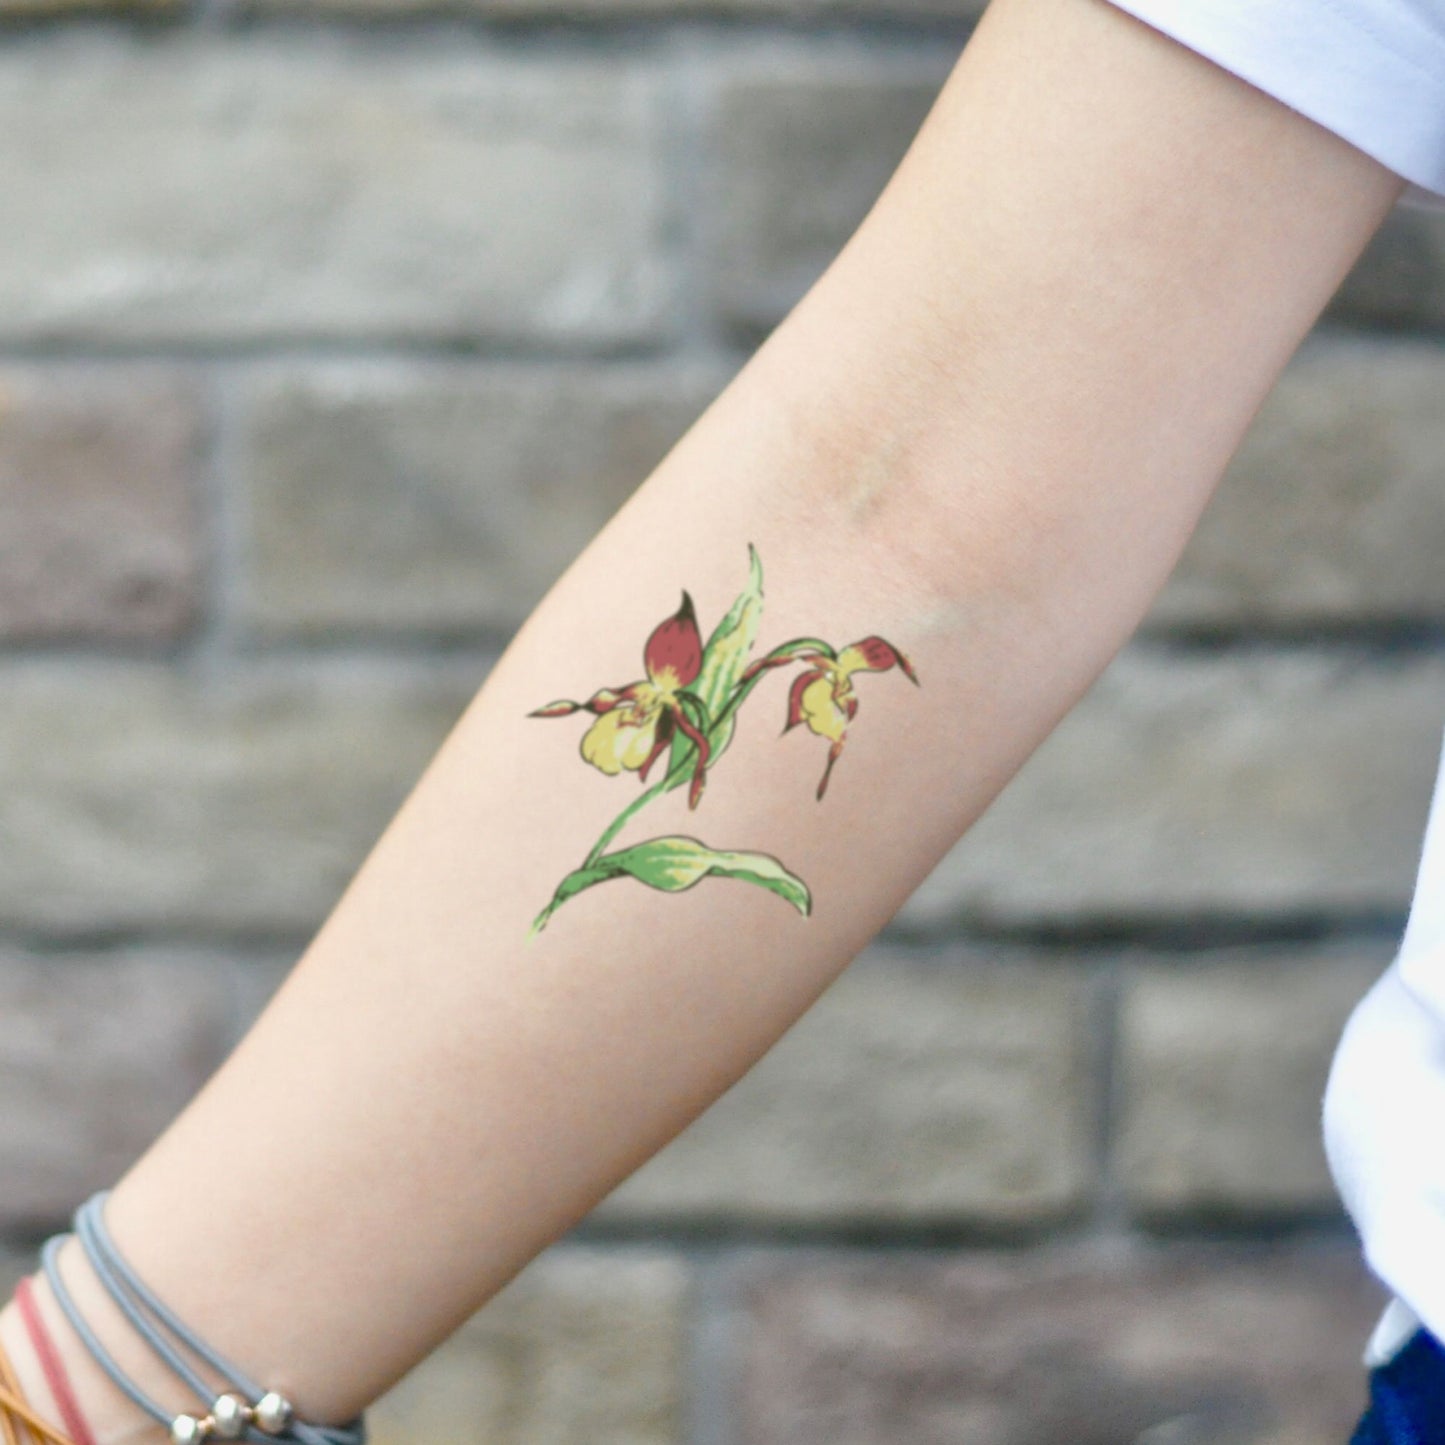 fake small showy lady slipper flower temporary tattoo sticker design idea on inner arm